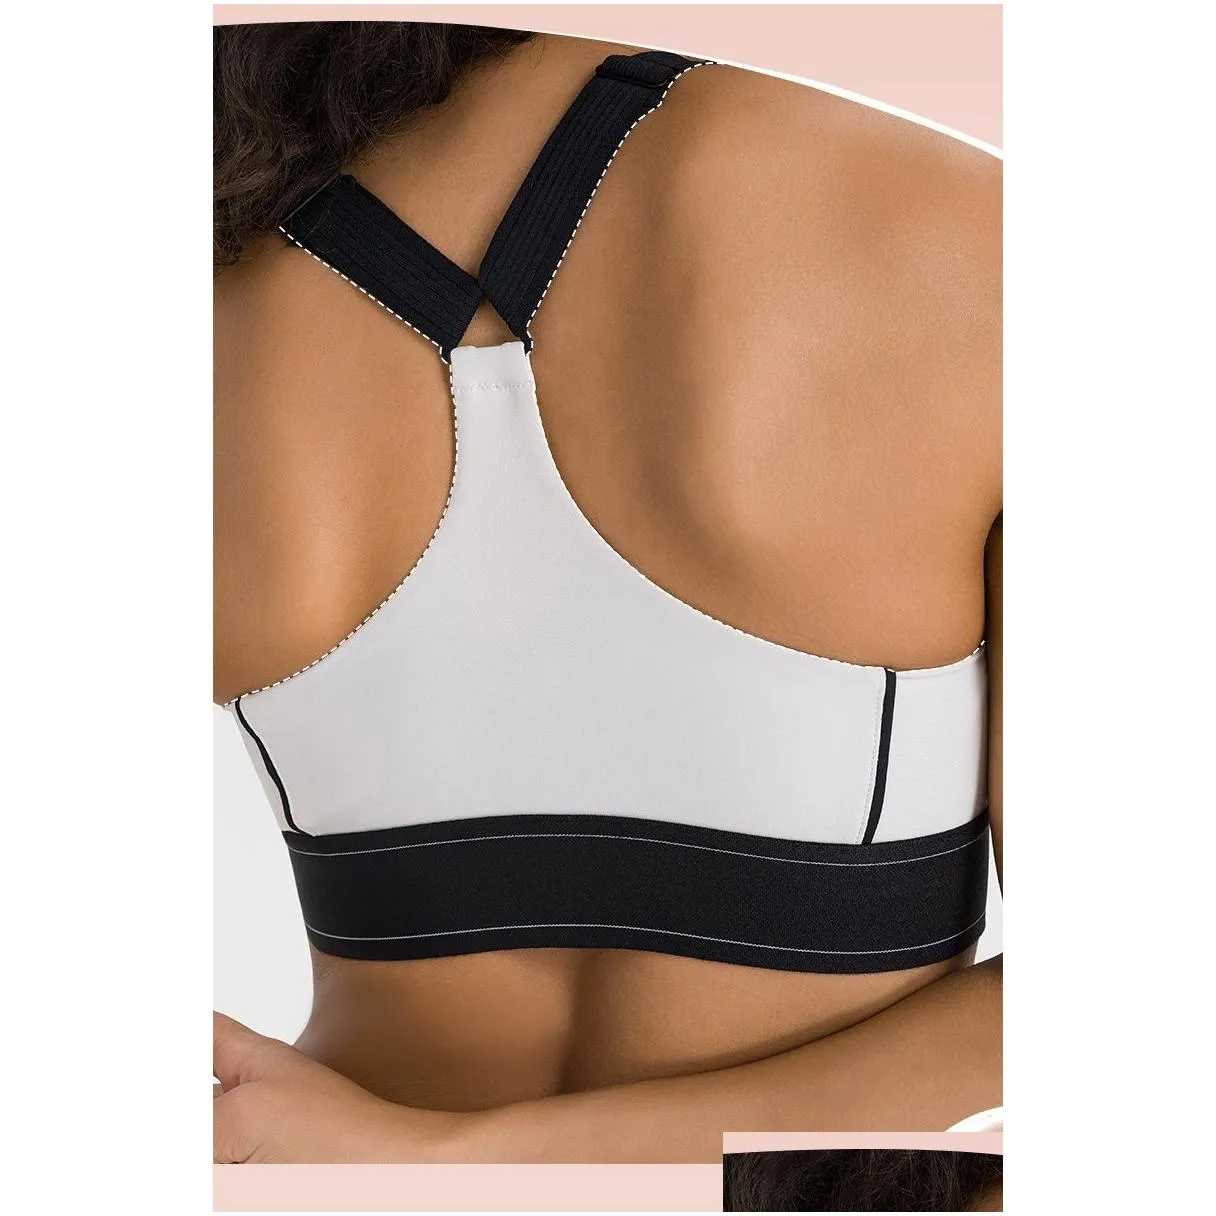 al-0010 adjustable shoulder strap sports bra elastic waist training yoga pants women activewear set